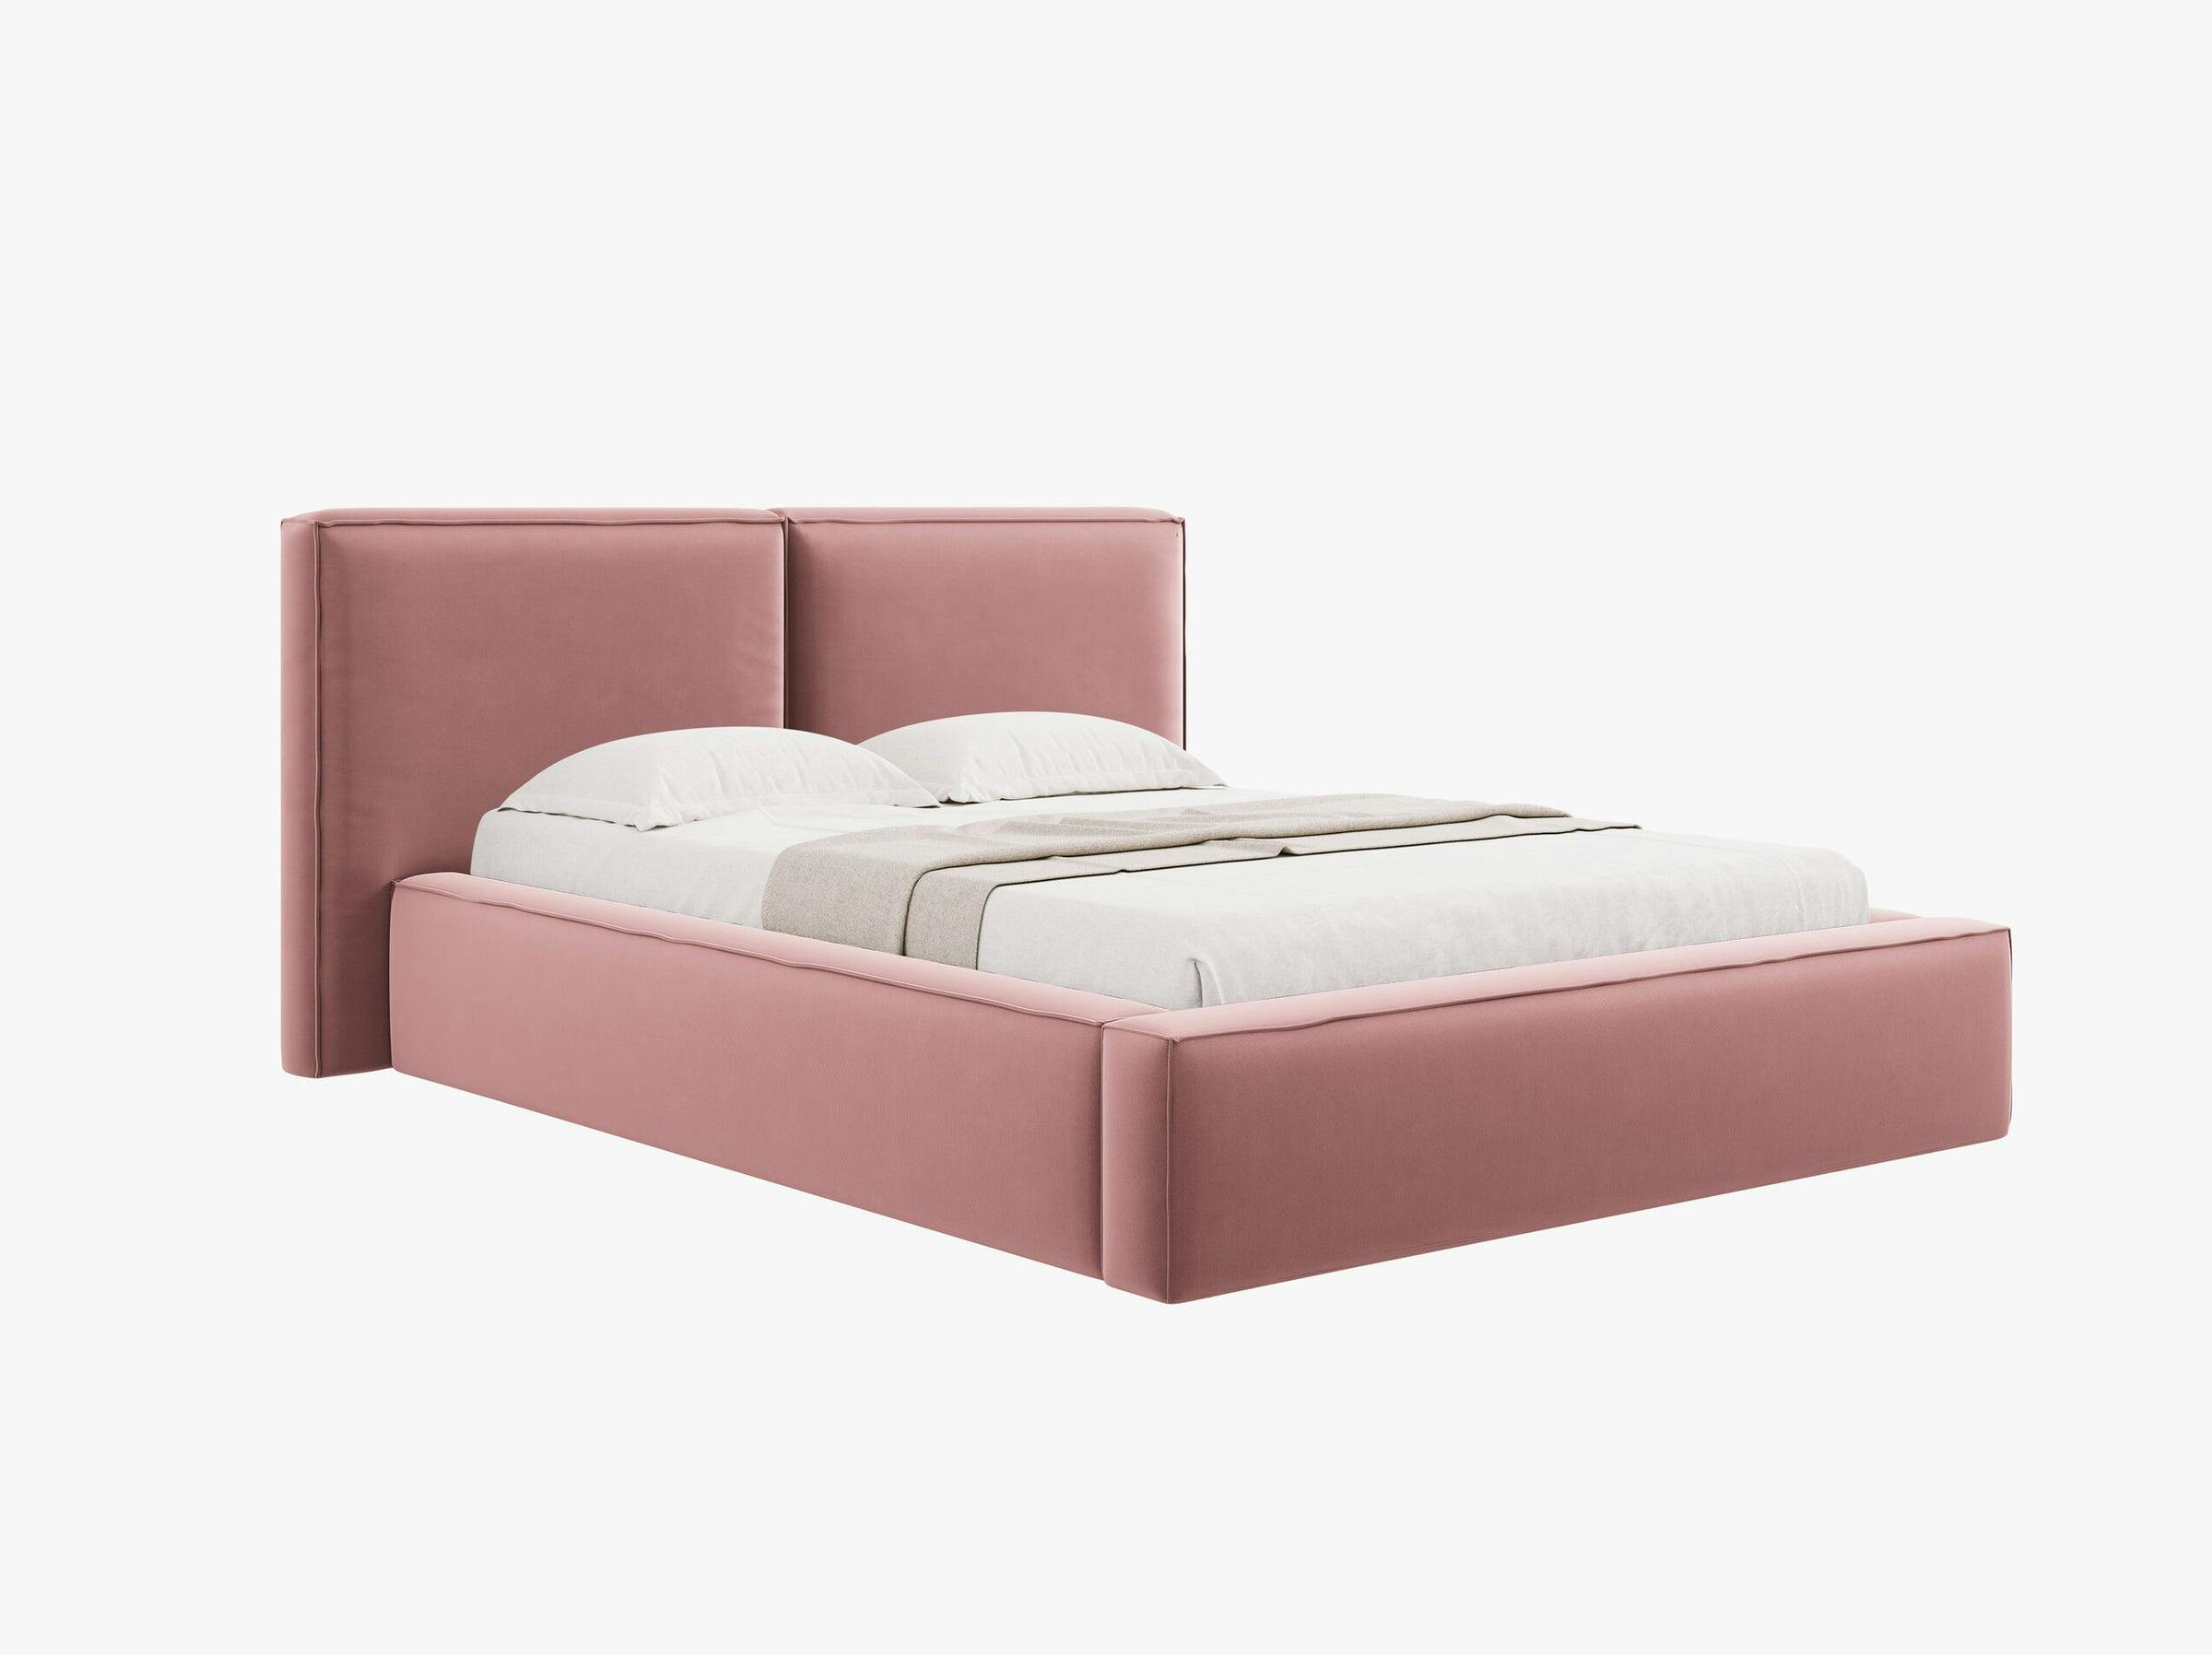 Jodie beds & mattresses velvet pink